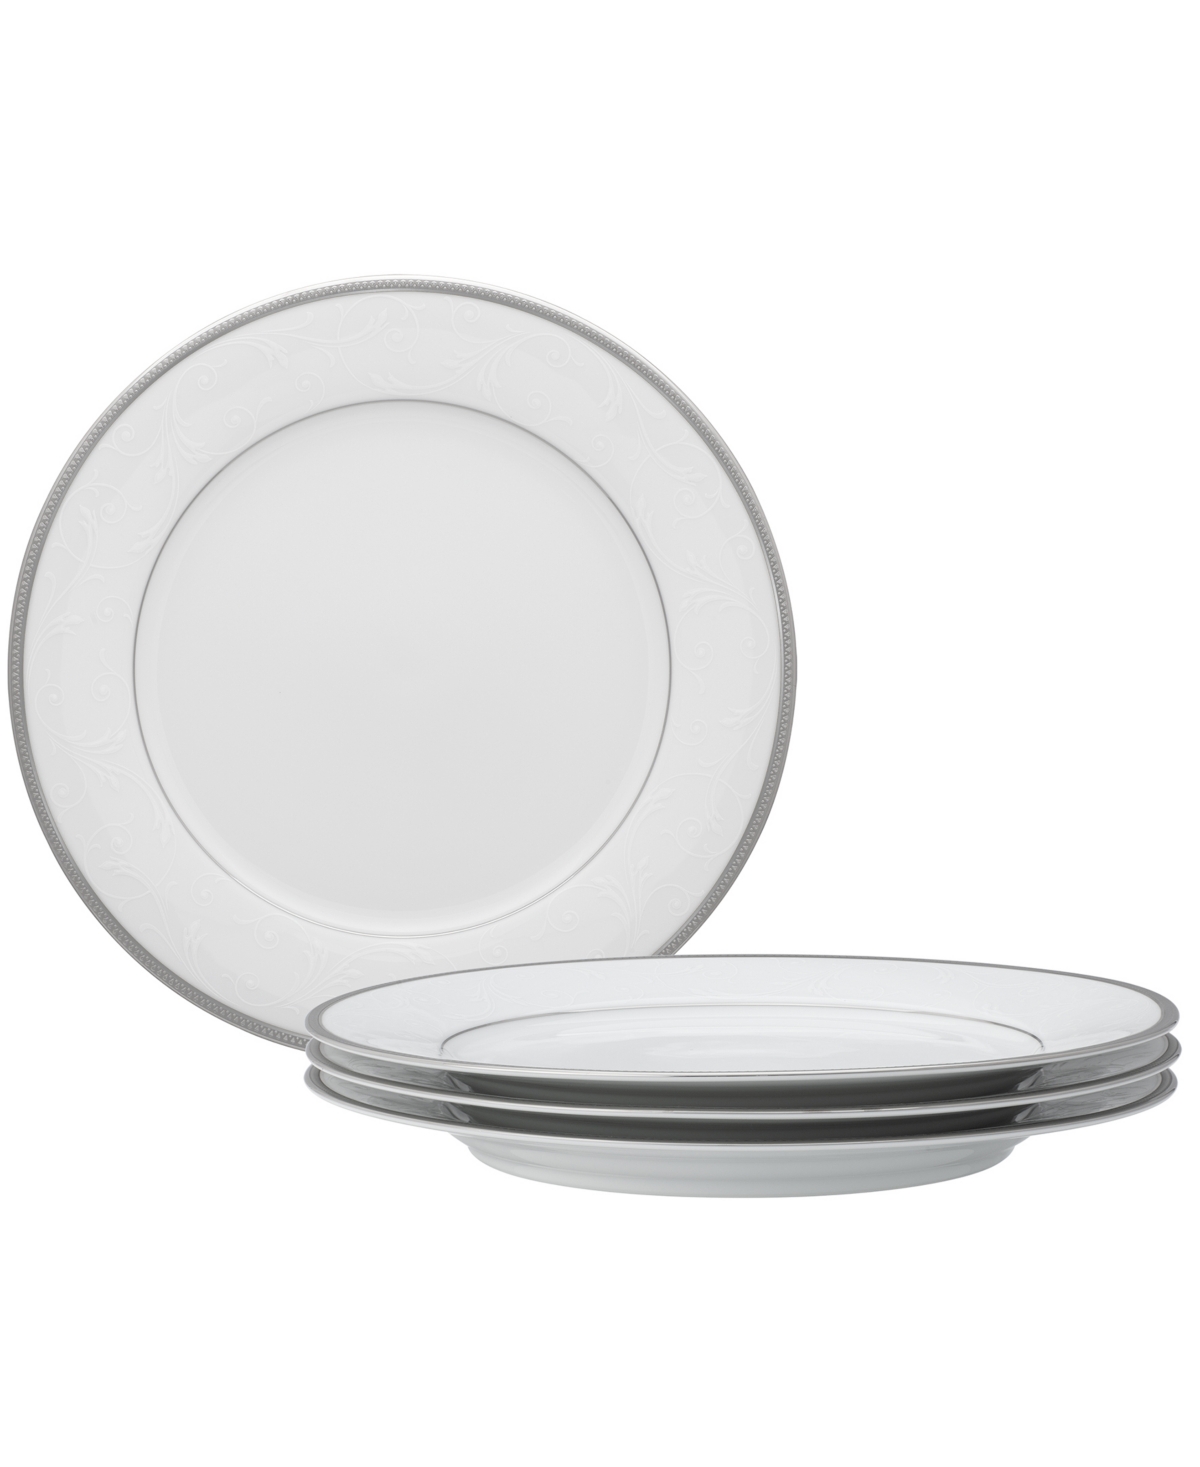 Noritake Regina Platinum Set Of 4 Dinner Plates, Service For 4 In White